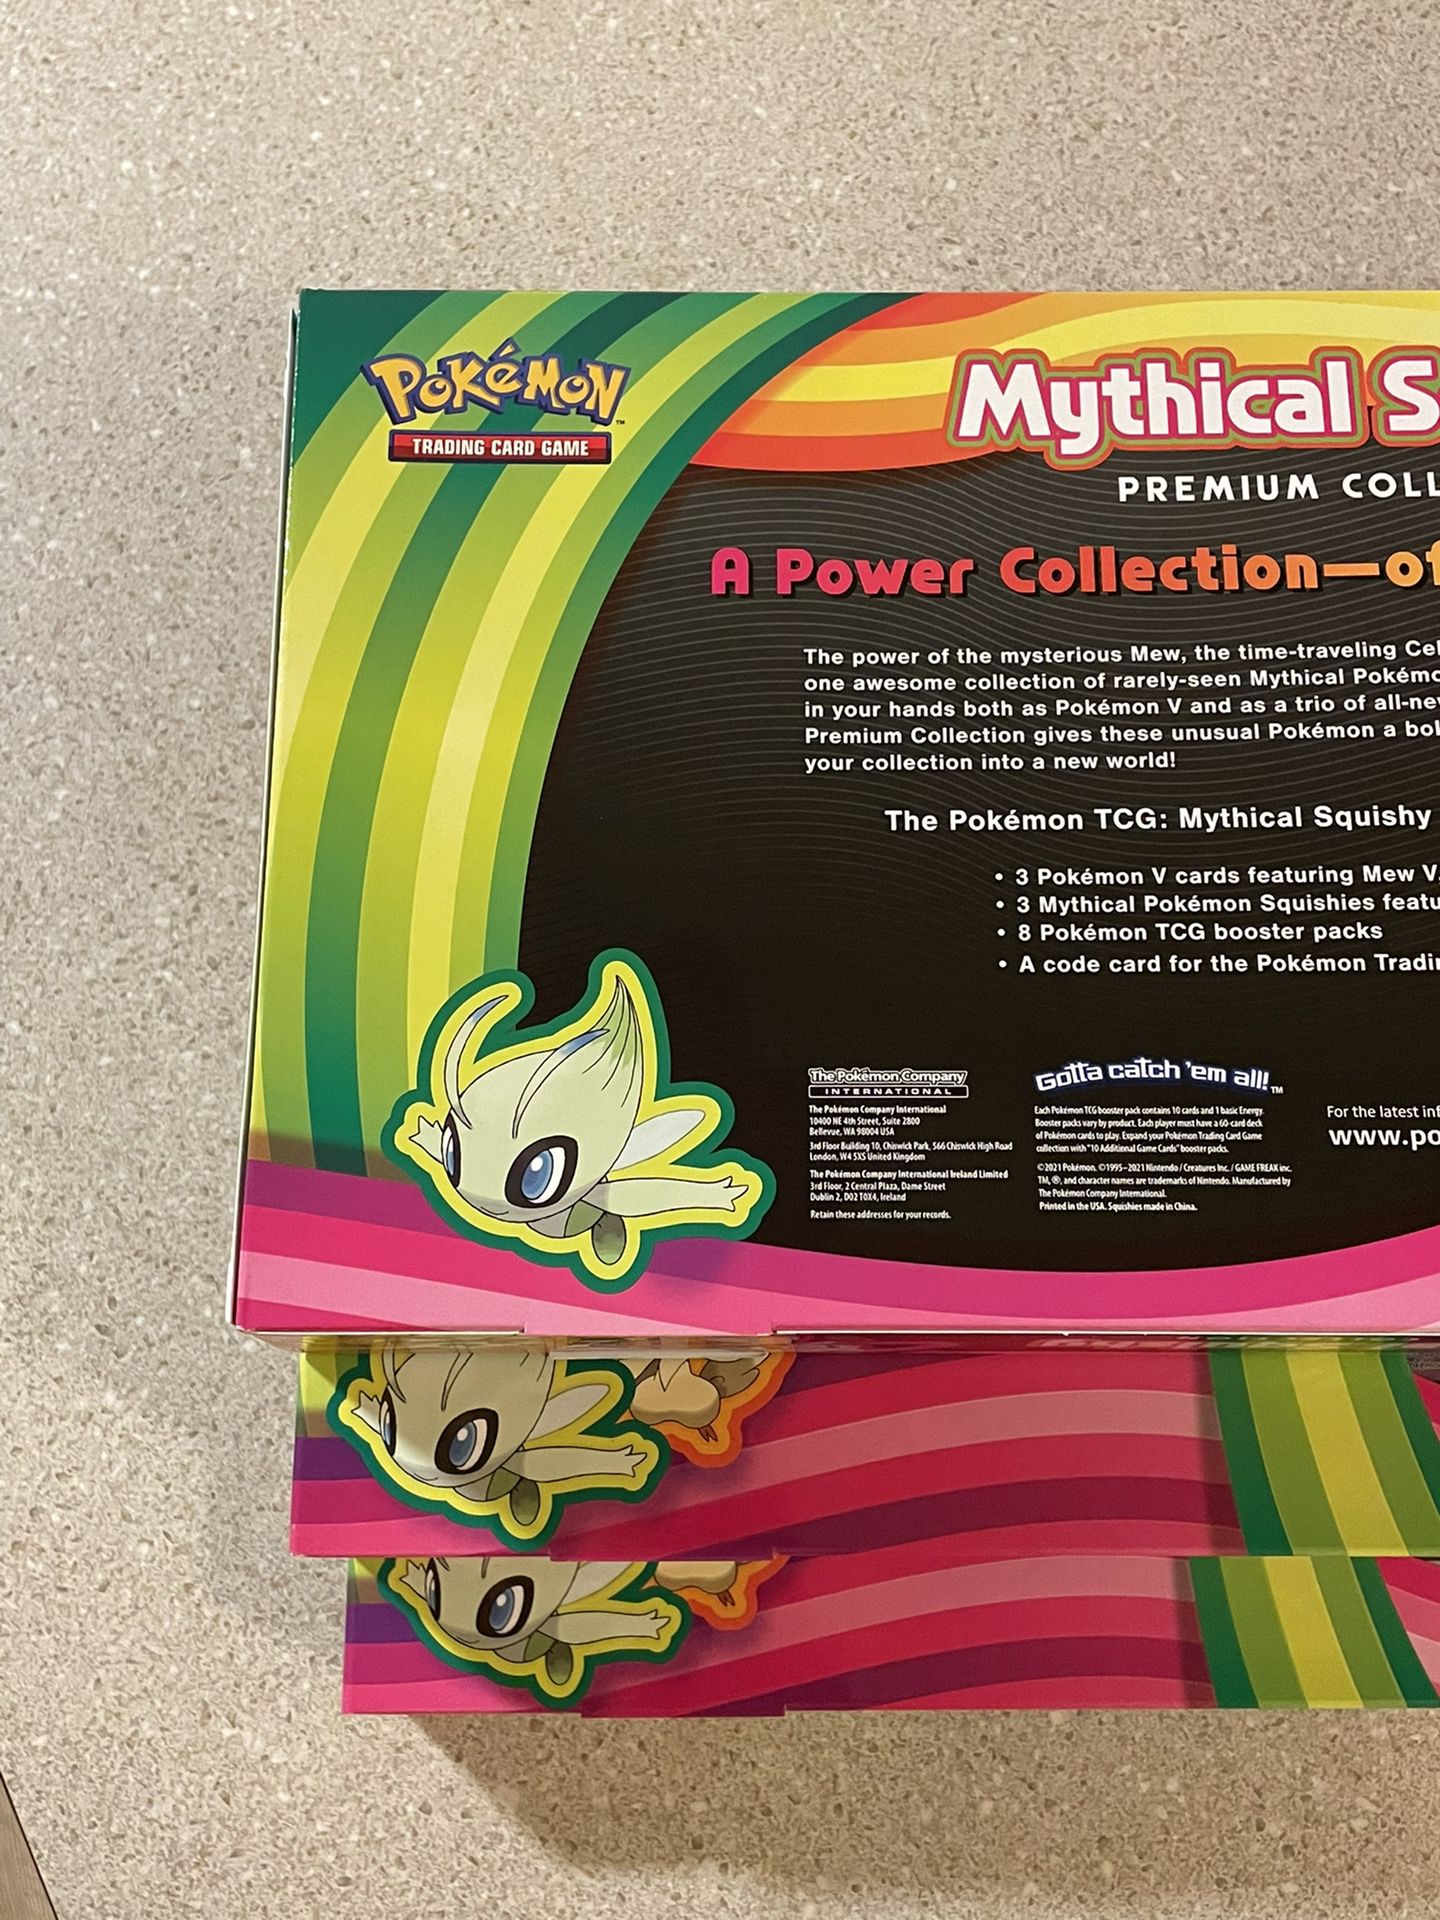 Pokémon Mythical Squishy Premium Collection Boxes